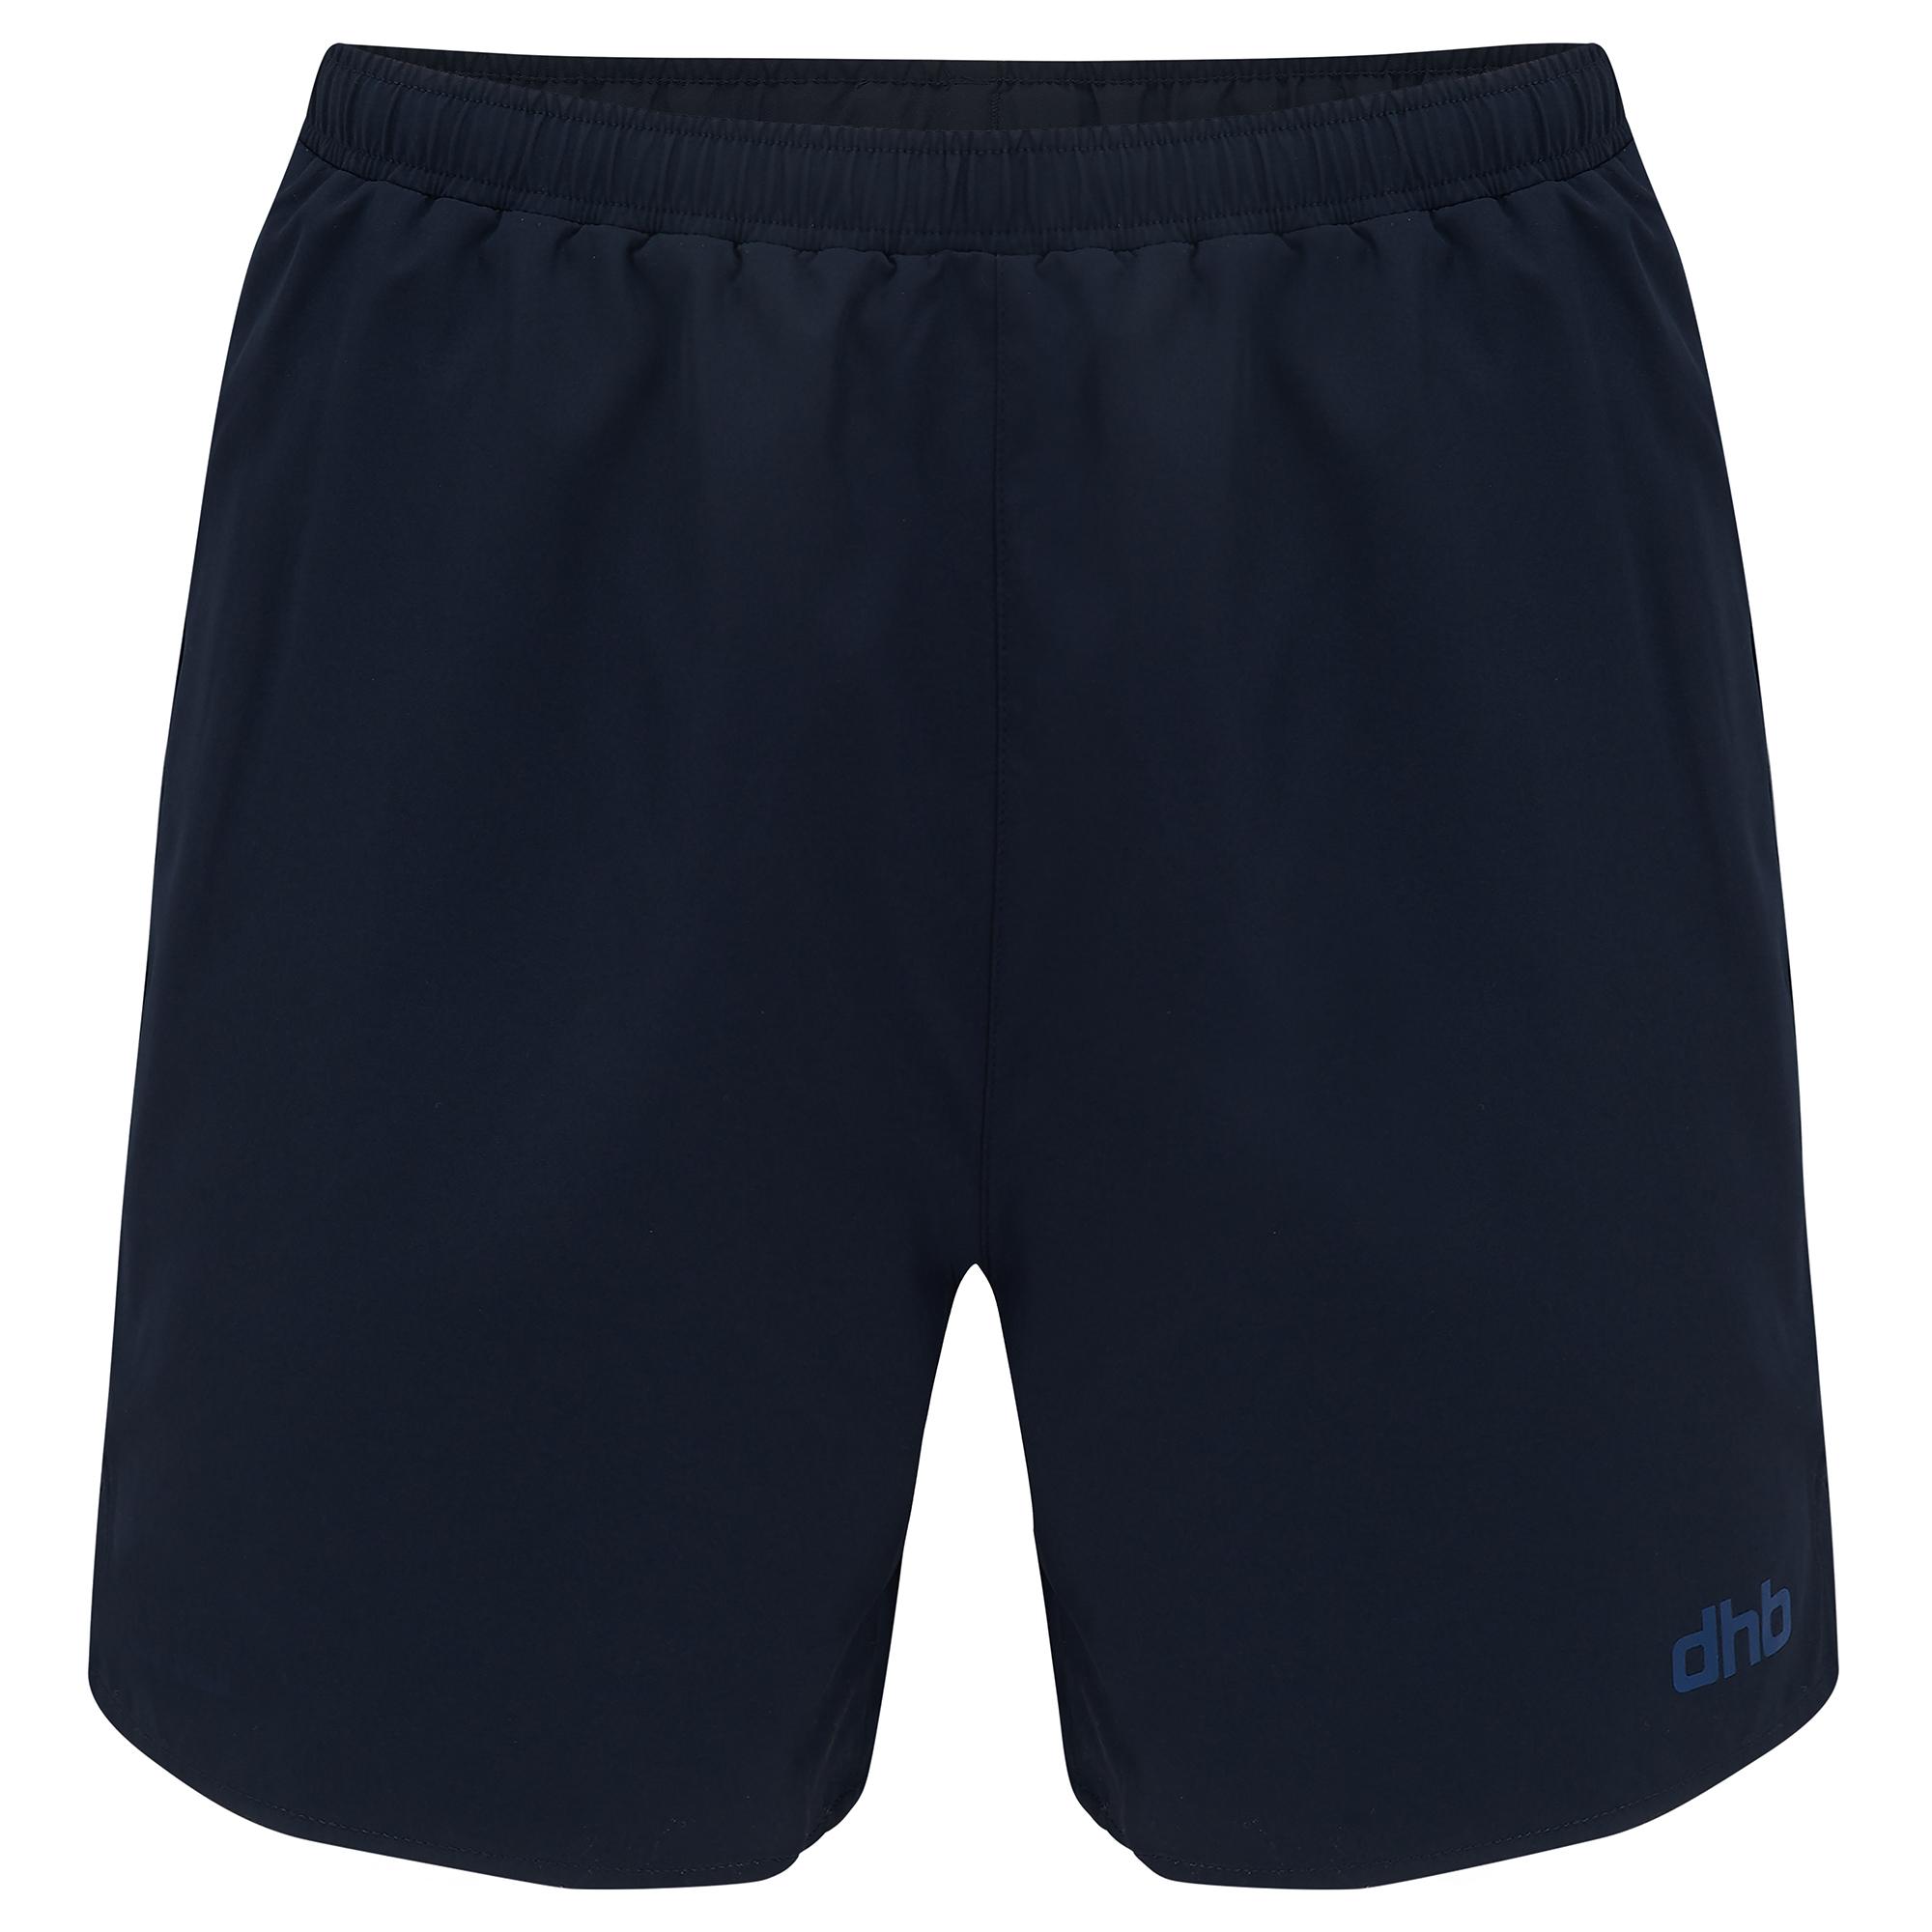 Dhb 5 Run Shorts - Navy